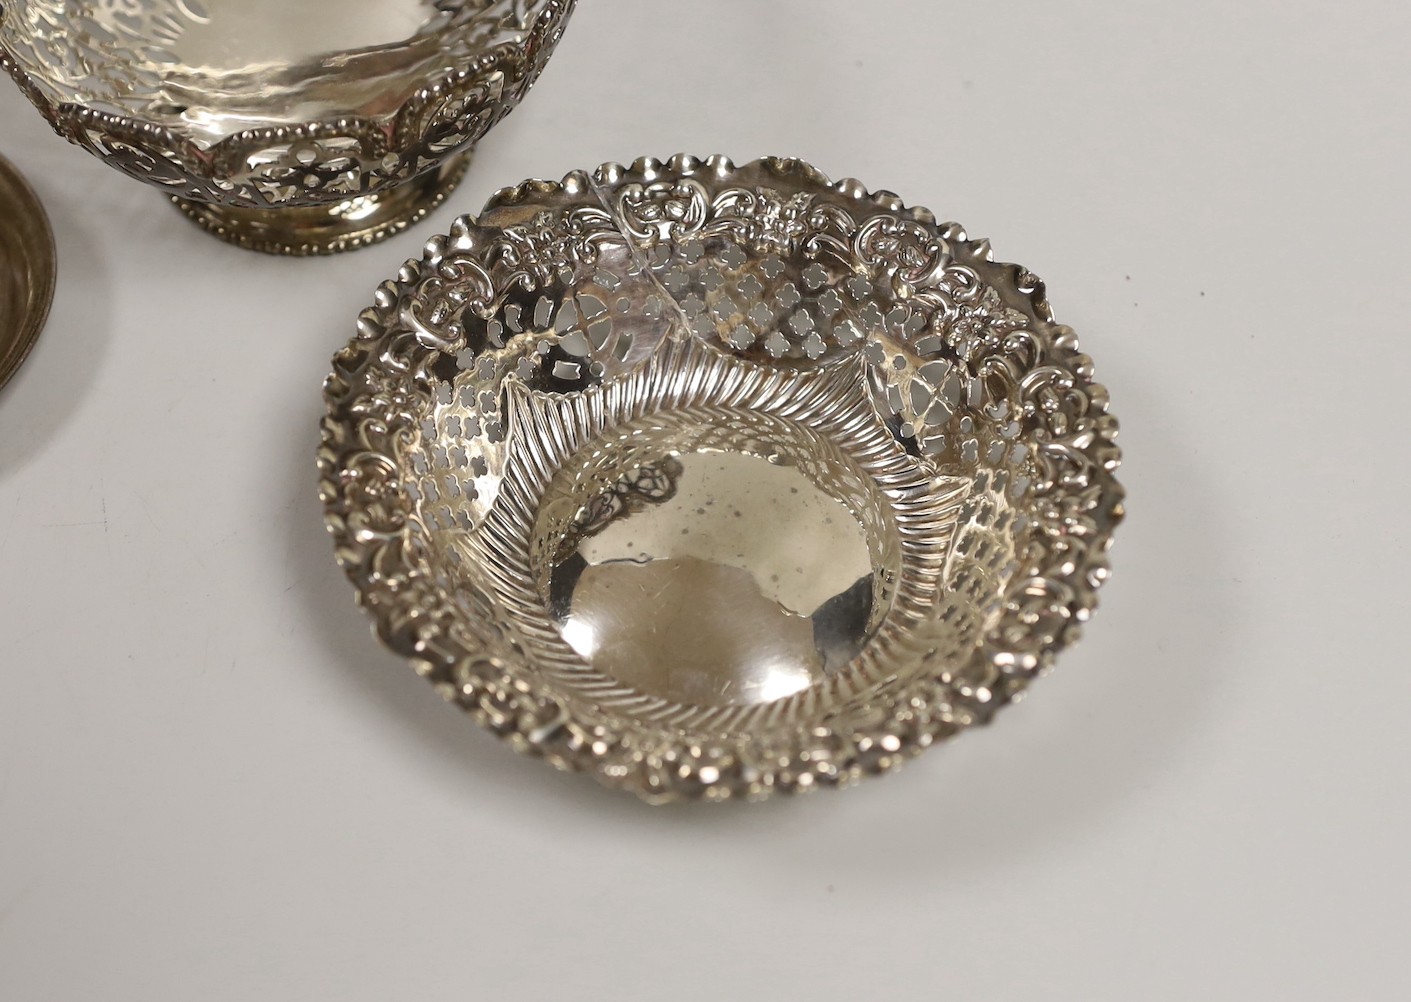 A pair of Edwardian pierced silver bonbon baskets, Nathan & Hayes, Birmingham, 1909, diameter 10.1cm, a pair of silver bonbon dishes, an Edwardian silver mounted glass hip flask, by Charles & George Asprey, London, 1908